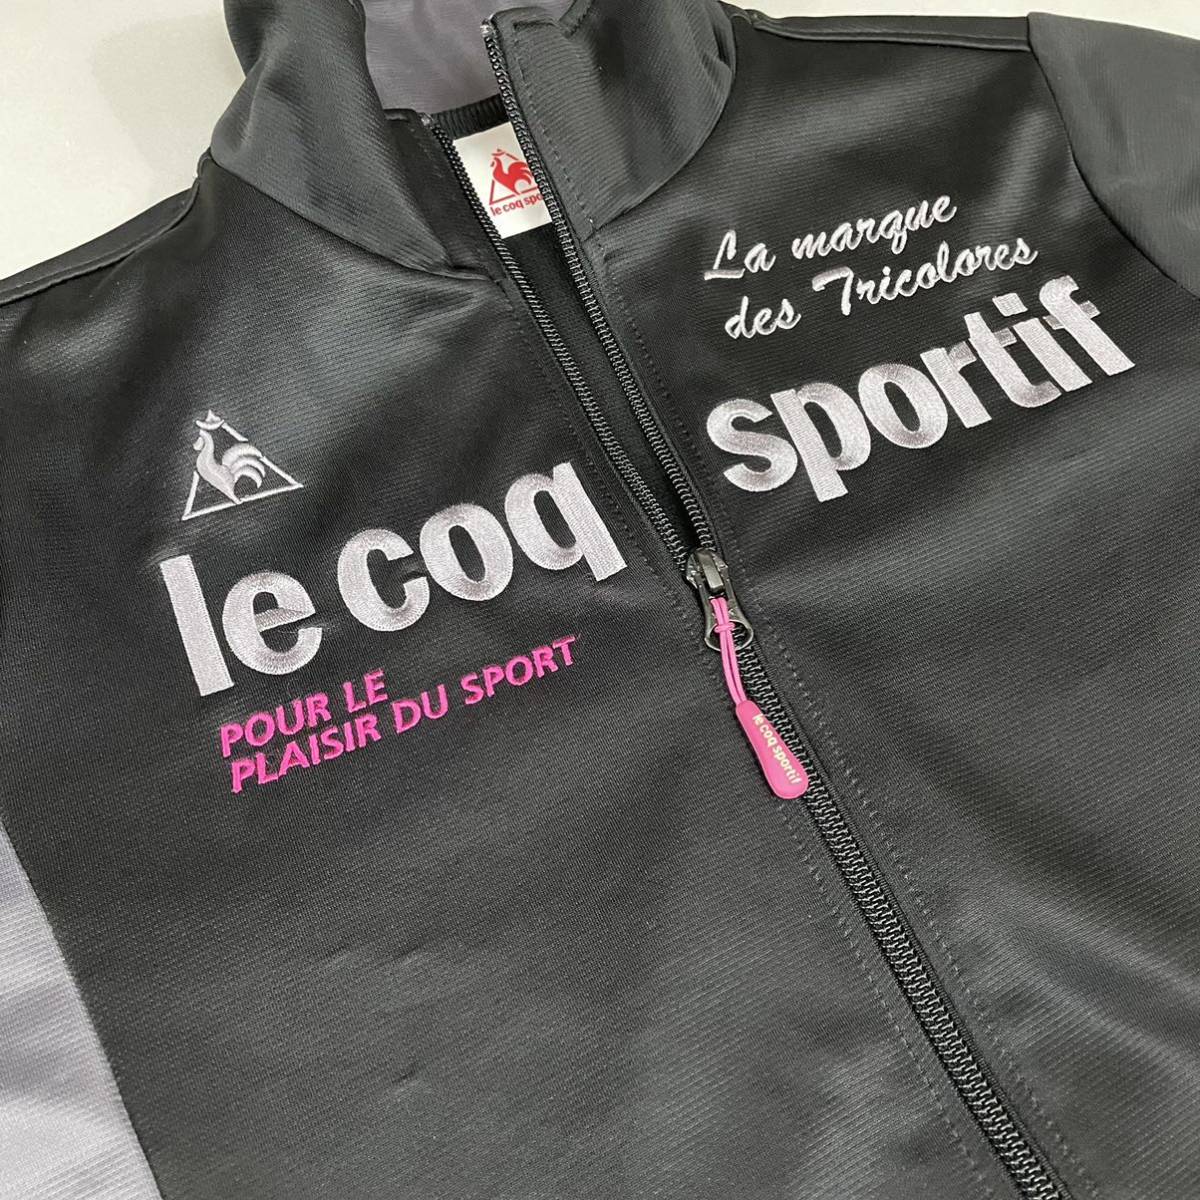  Le Coq le coq sportif Le Coq s Porte .f джерси выставить другой размер женский спорт одежда - верх и низ в комплекте %*